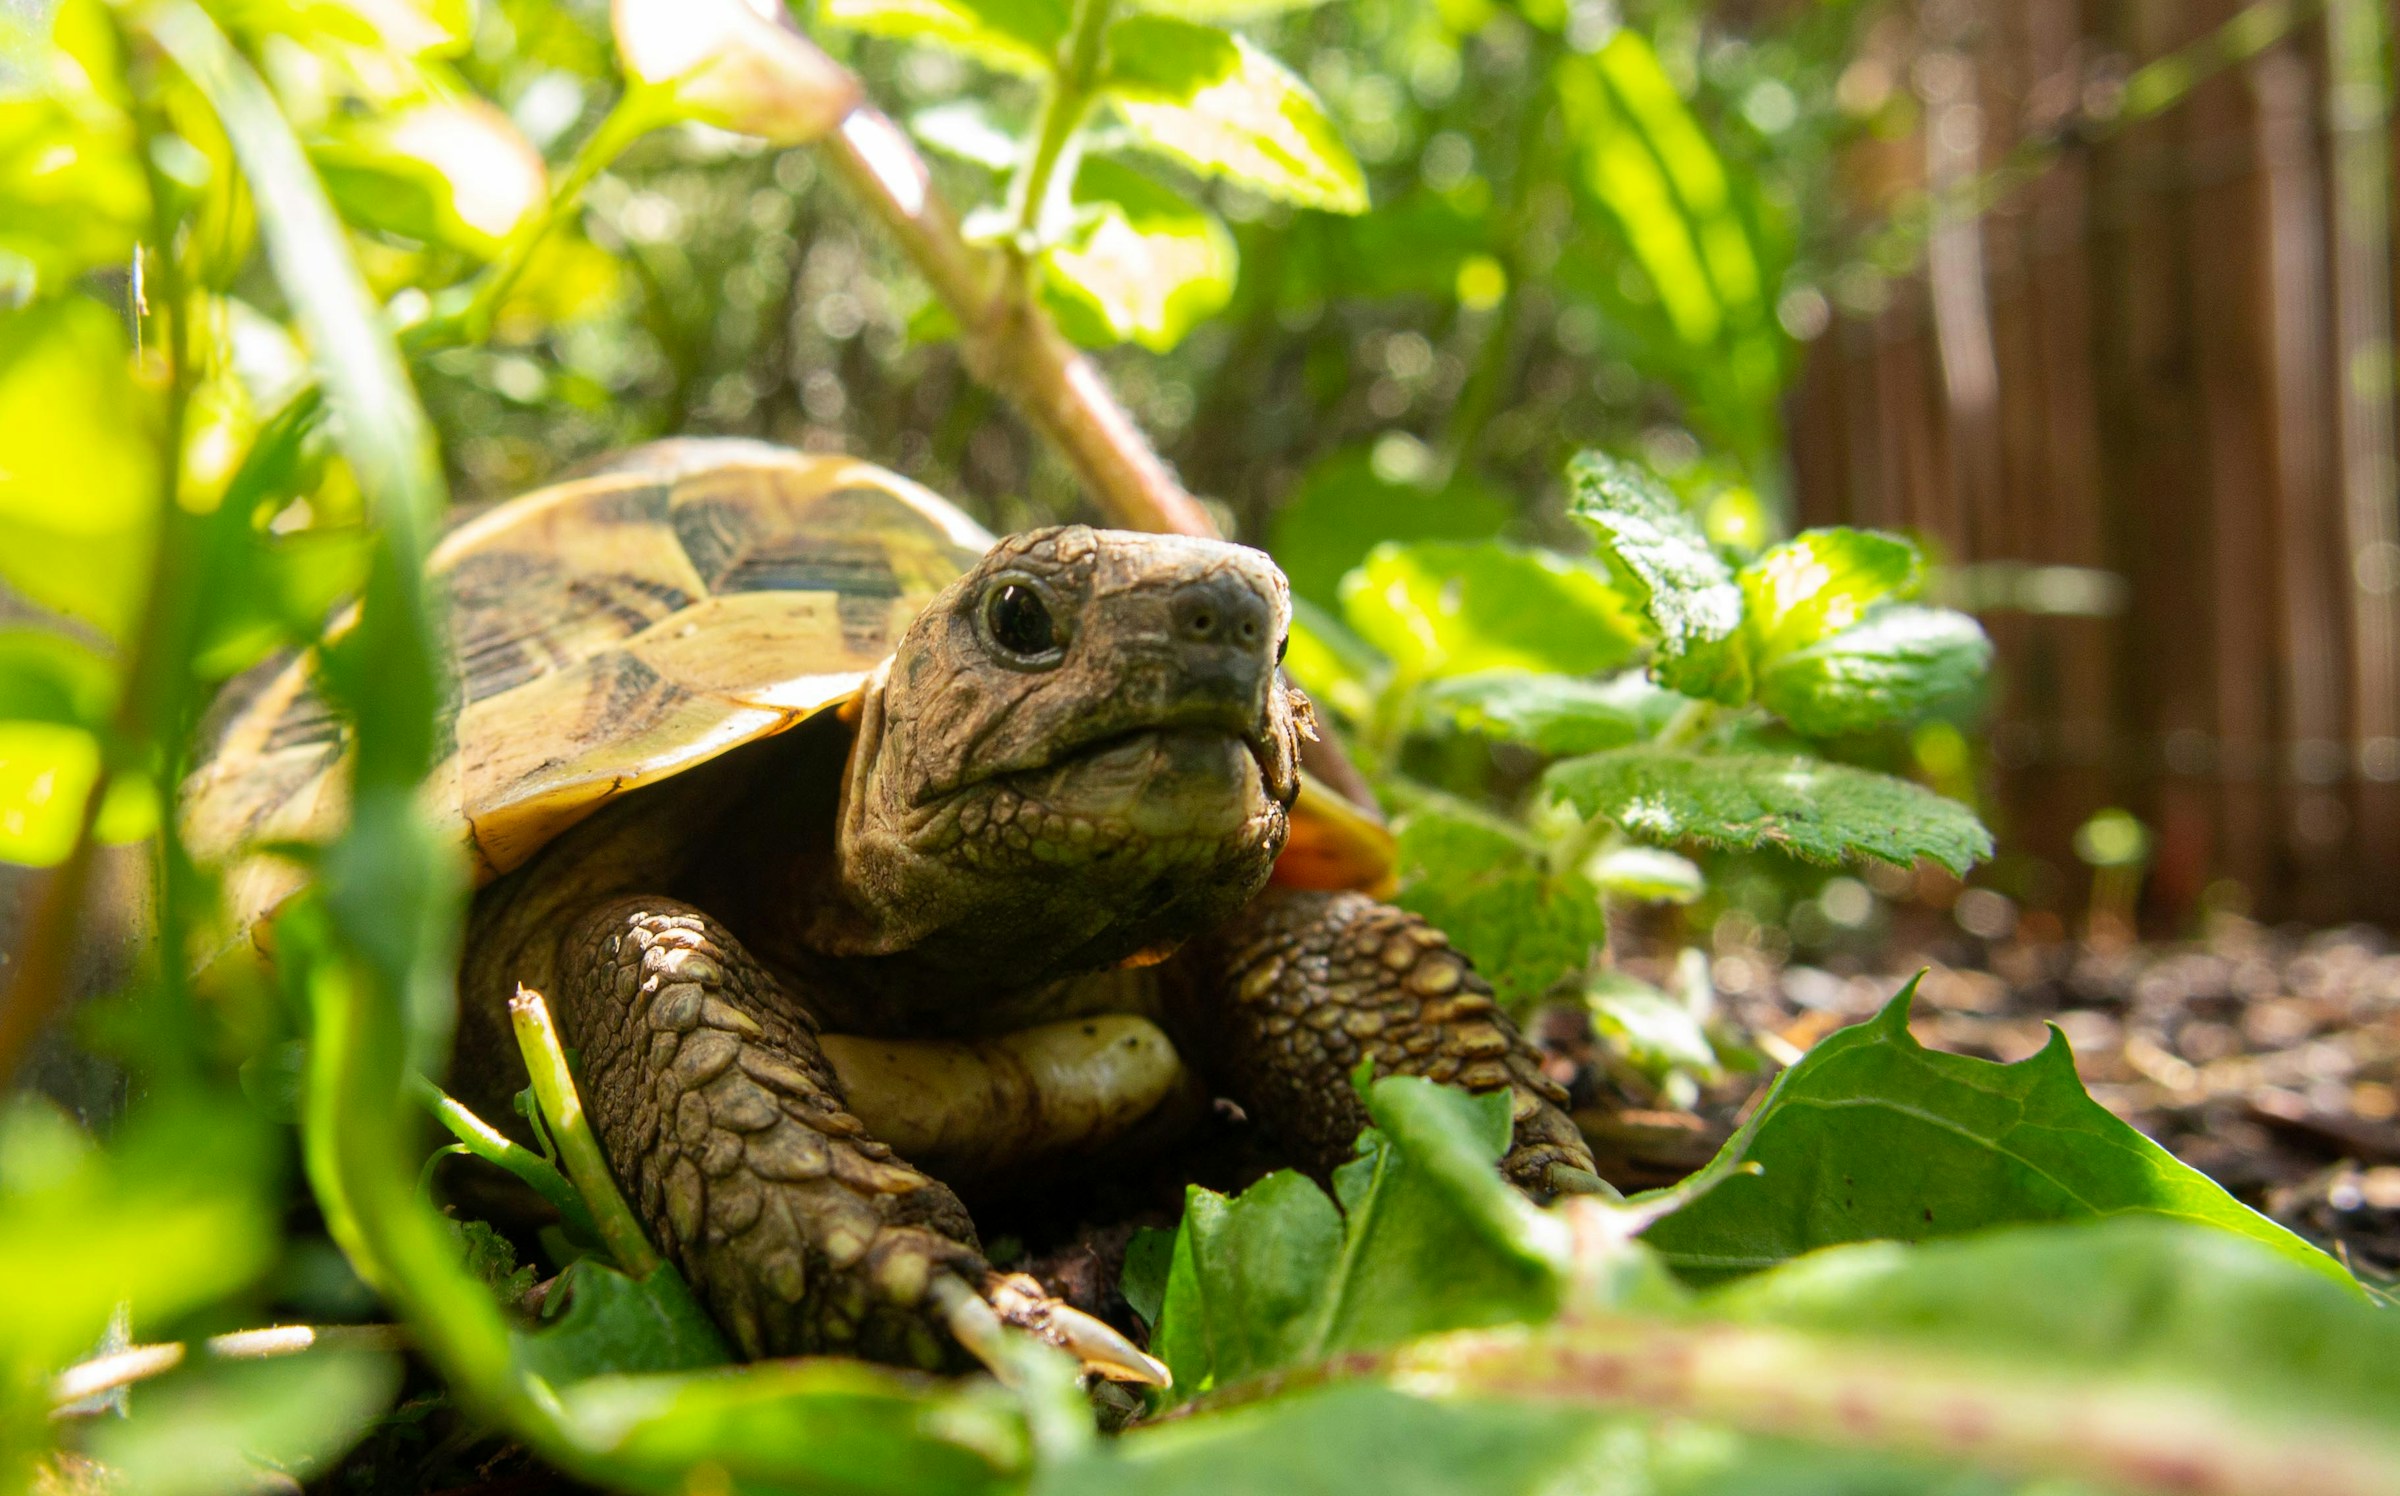 A tortoise | Source: Unsplash